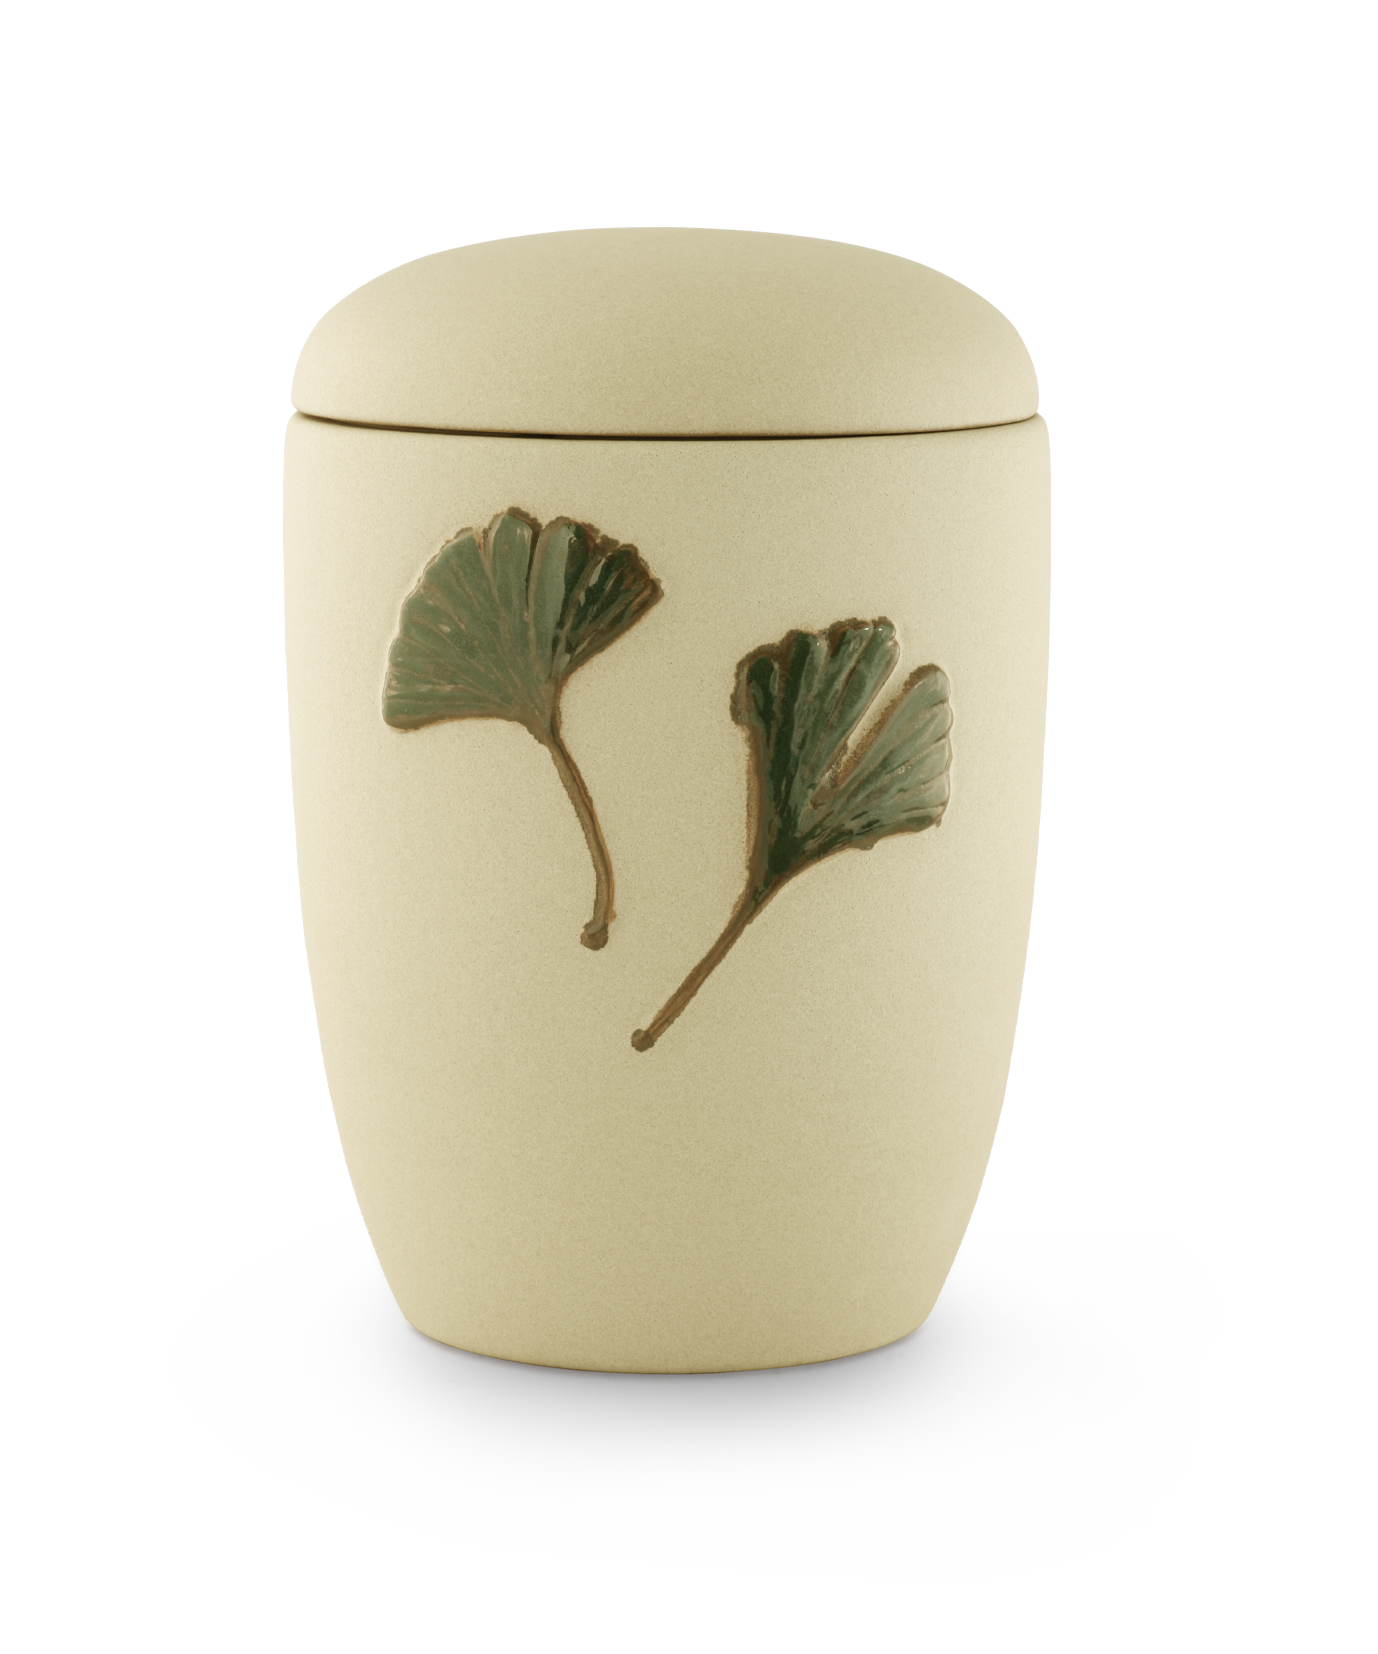 Völsing urn ginkgo leaves ceramic